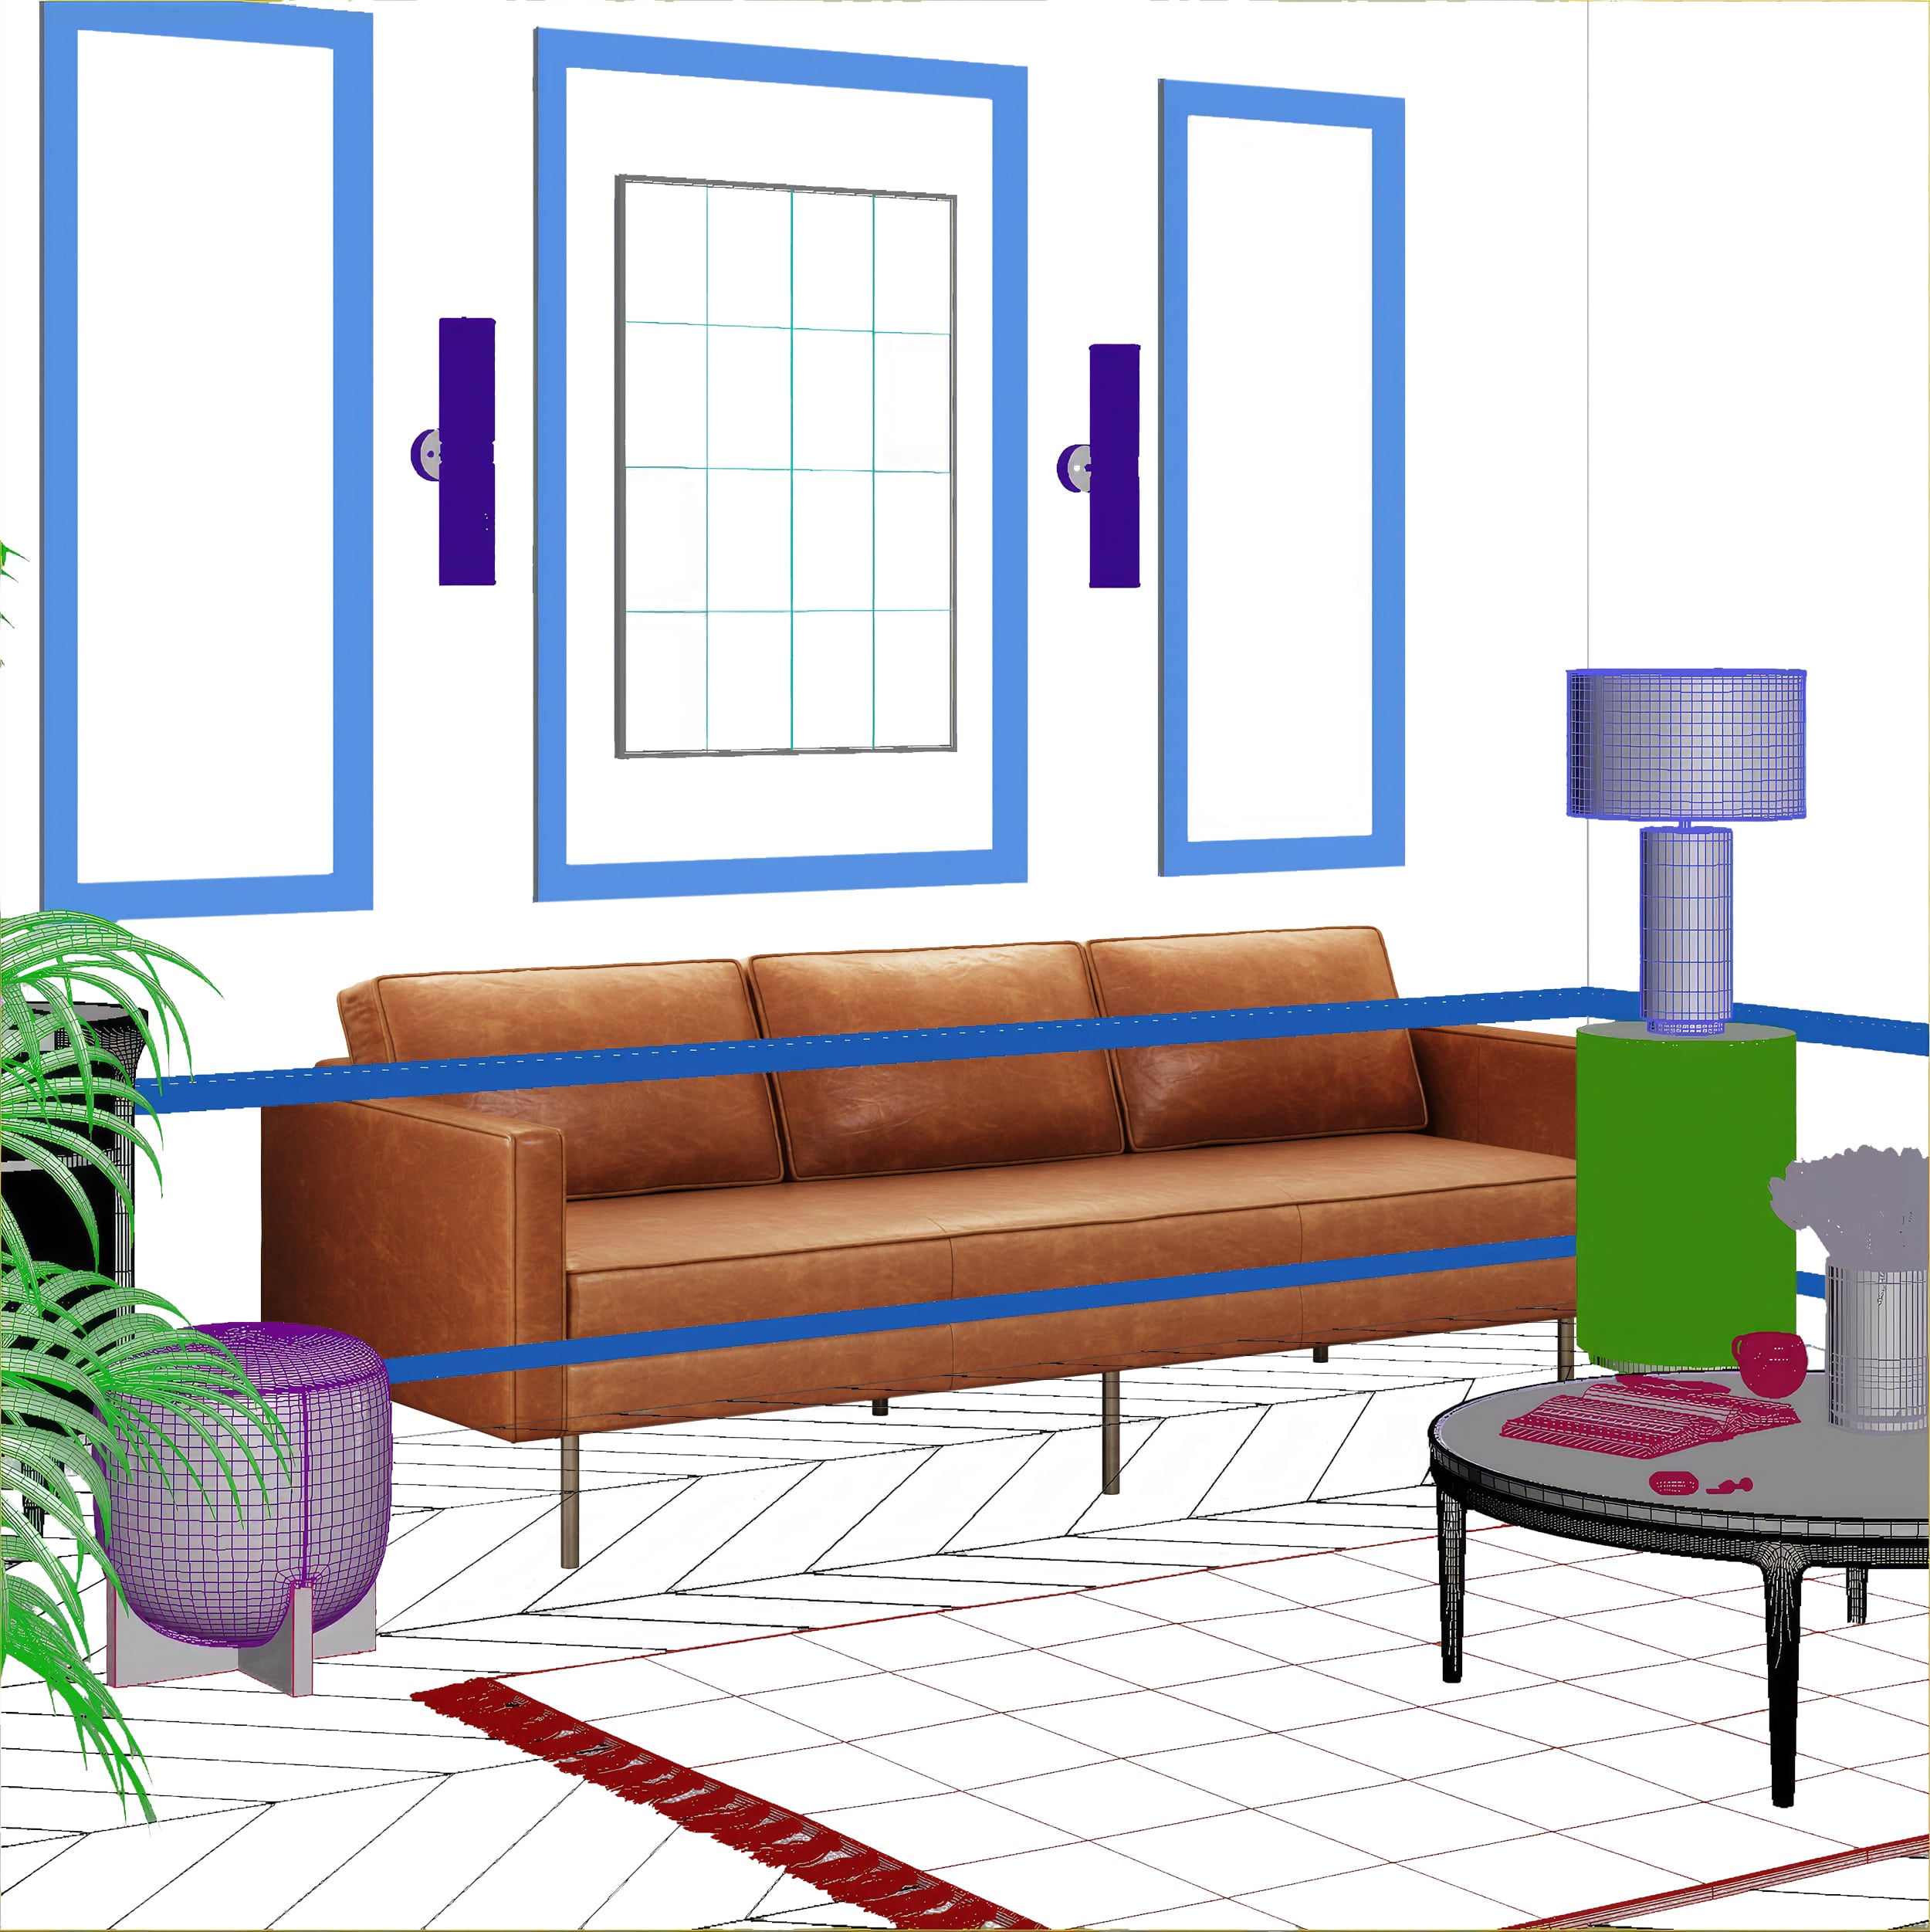 CGI Process: Sofa Grid Model in a 3D Scene